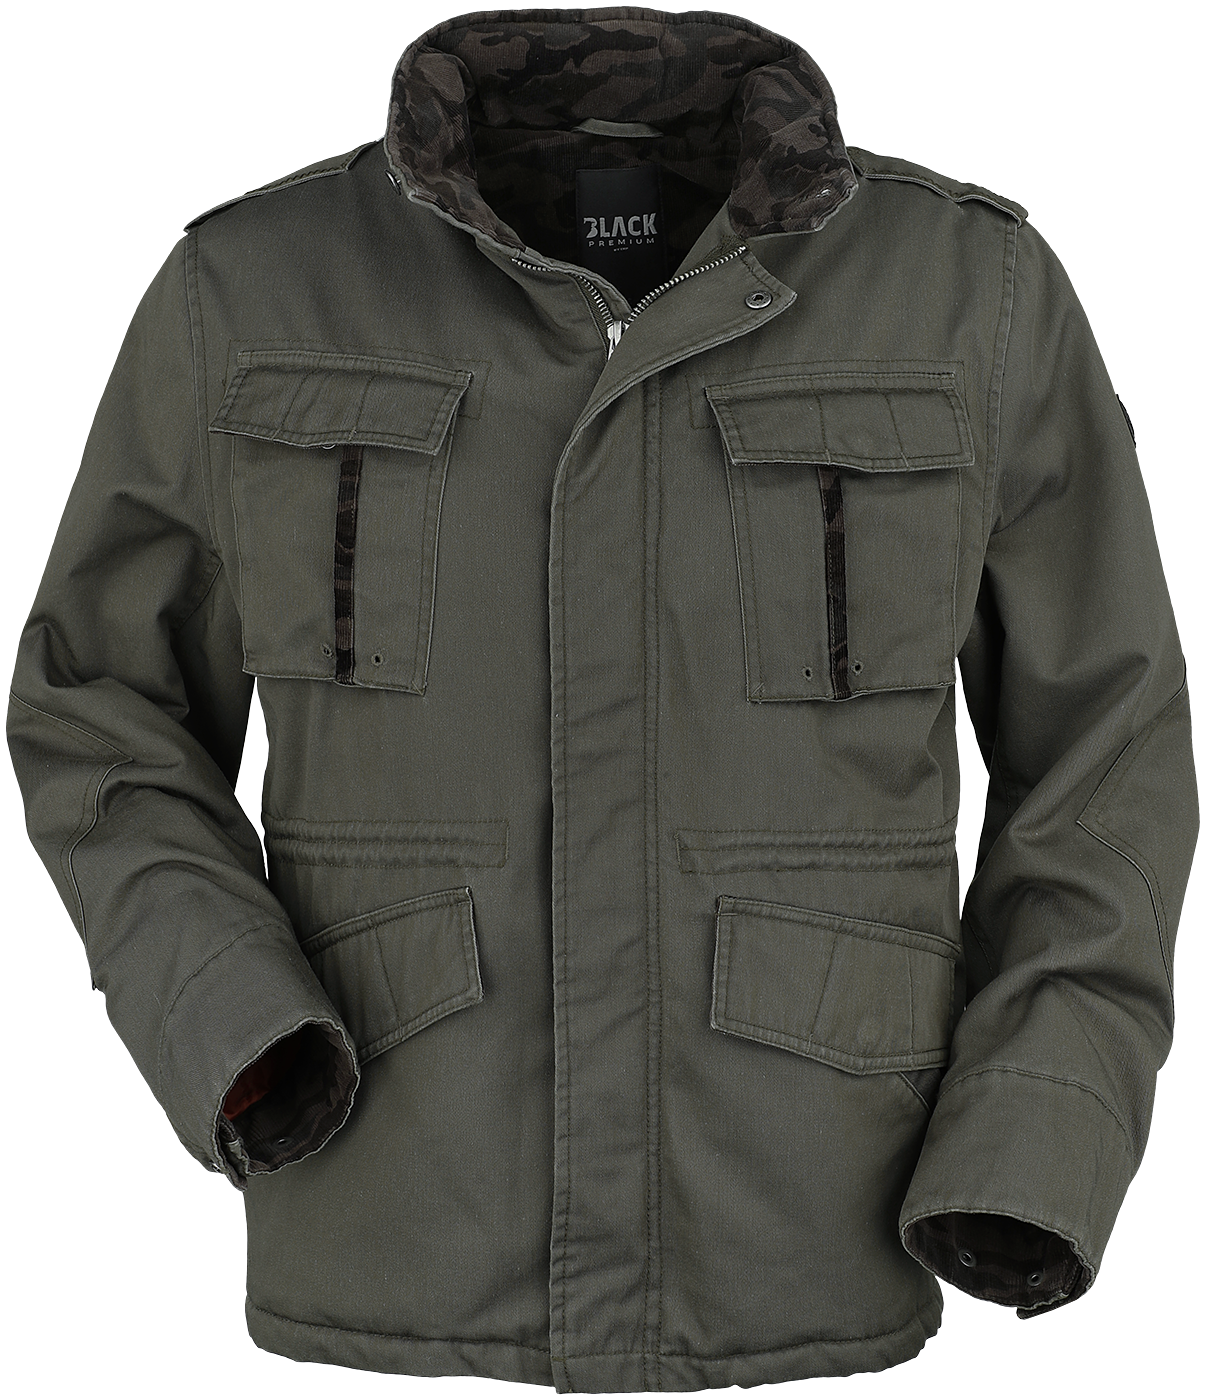 Black Premium by EMP - Jacket with hidden hood - Winterjacke - oliv| olivcamo - EMP Exklusiv!